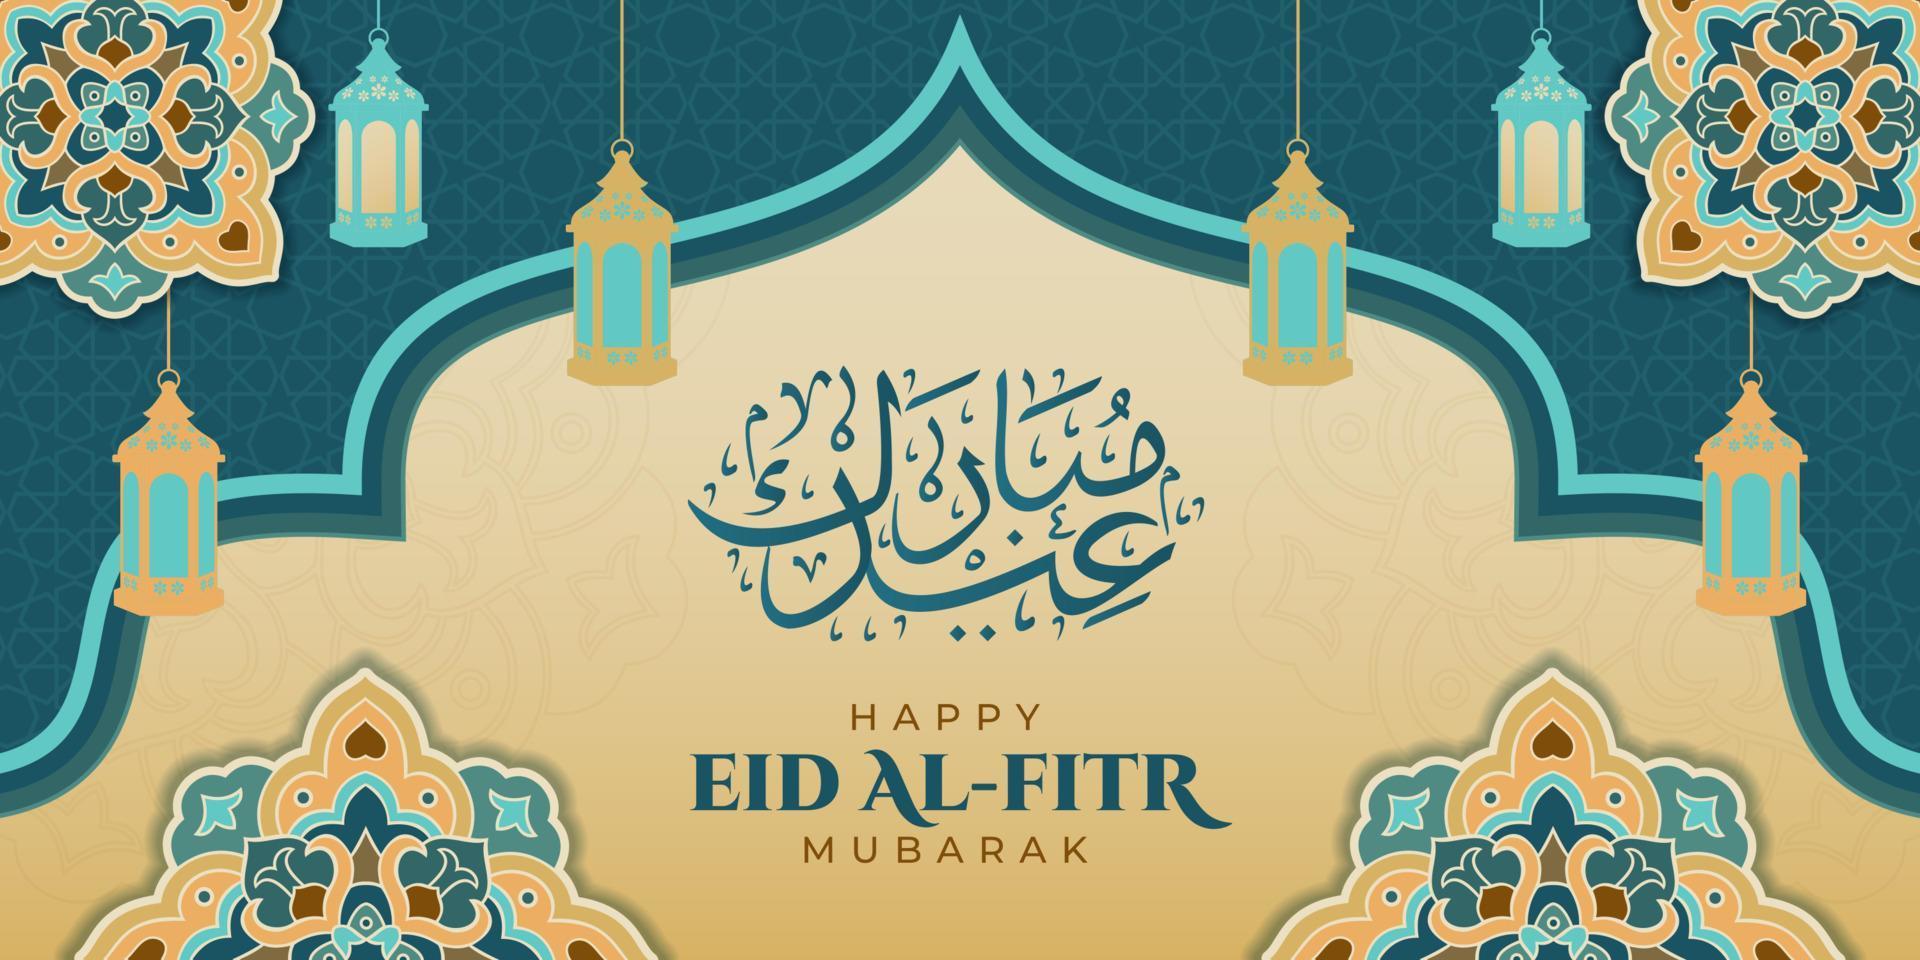 Eid al fitr mubarak greeting, Islamic ornament template for background, banner, poster, cover design, envelope, social media feed. Ramadan Kareem and eid mubarak 2023 concept vector